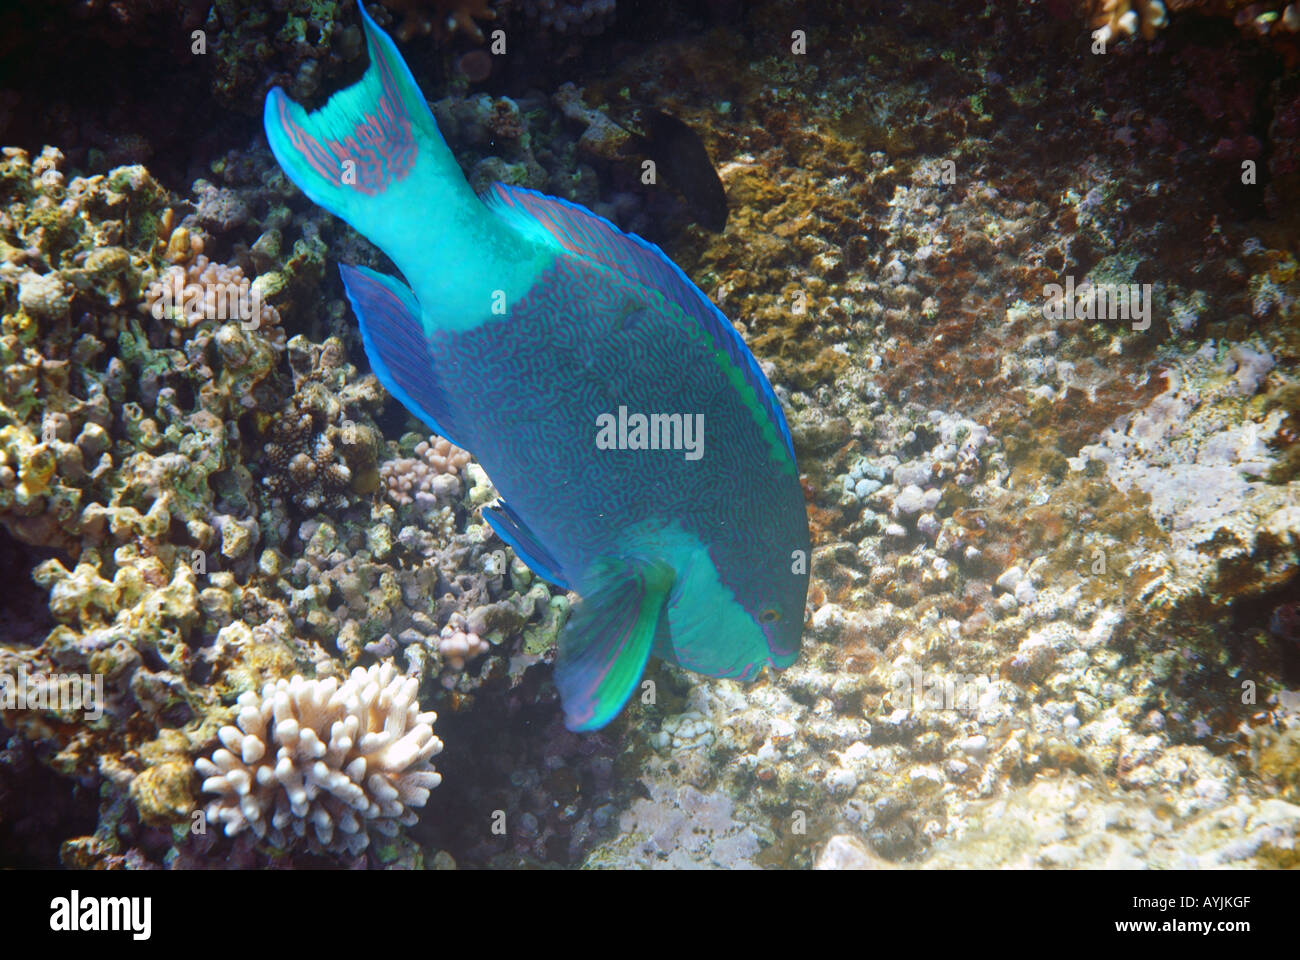 Male bridled parrotfish Scarus frenatus Stock Photo